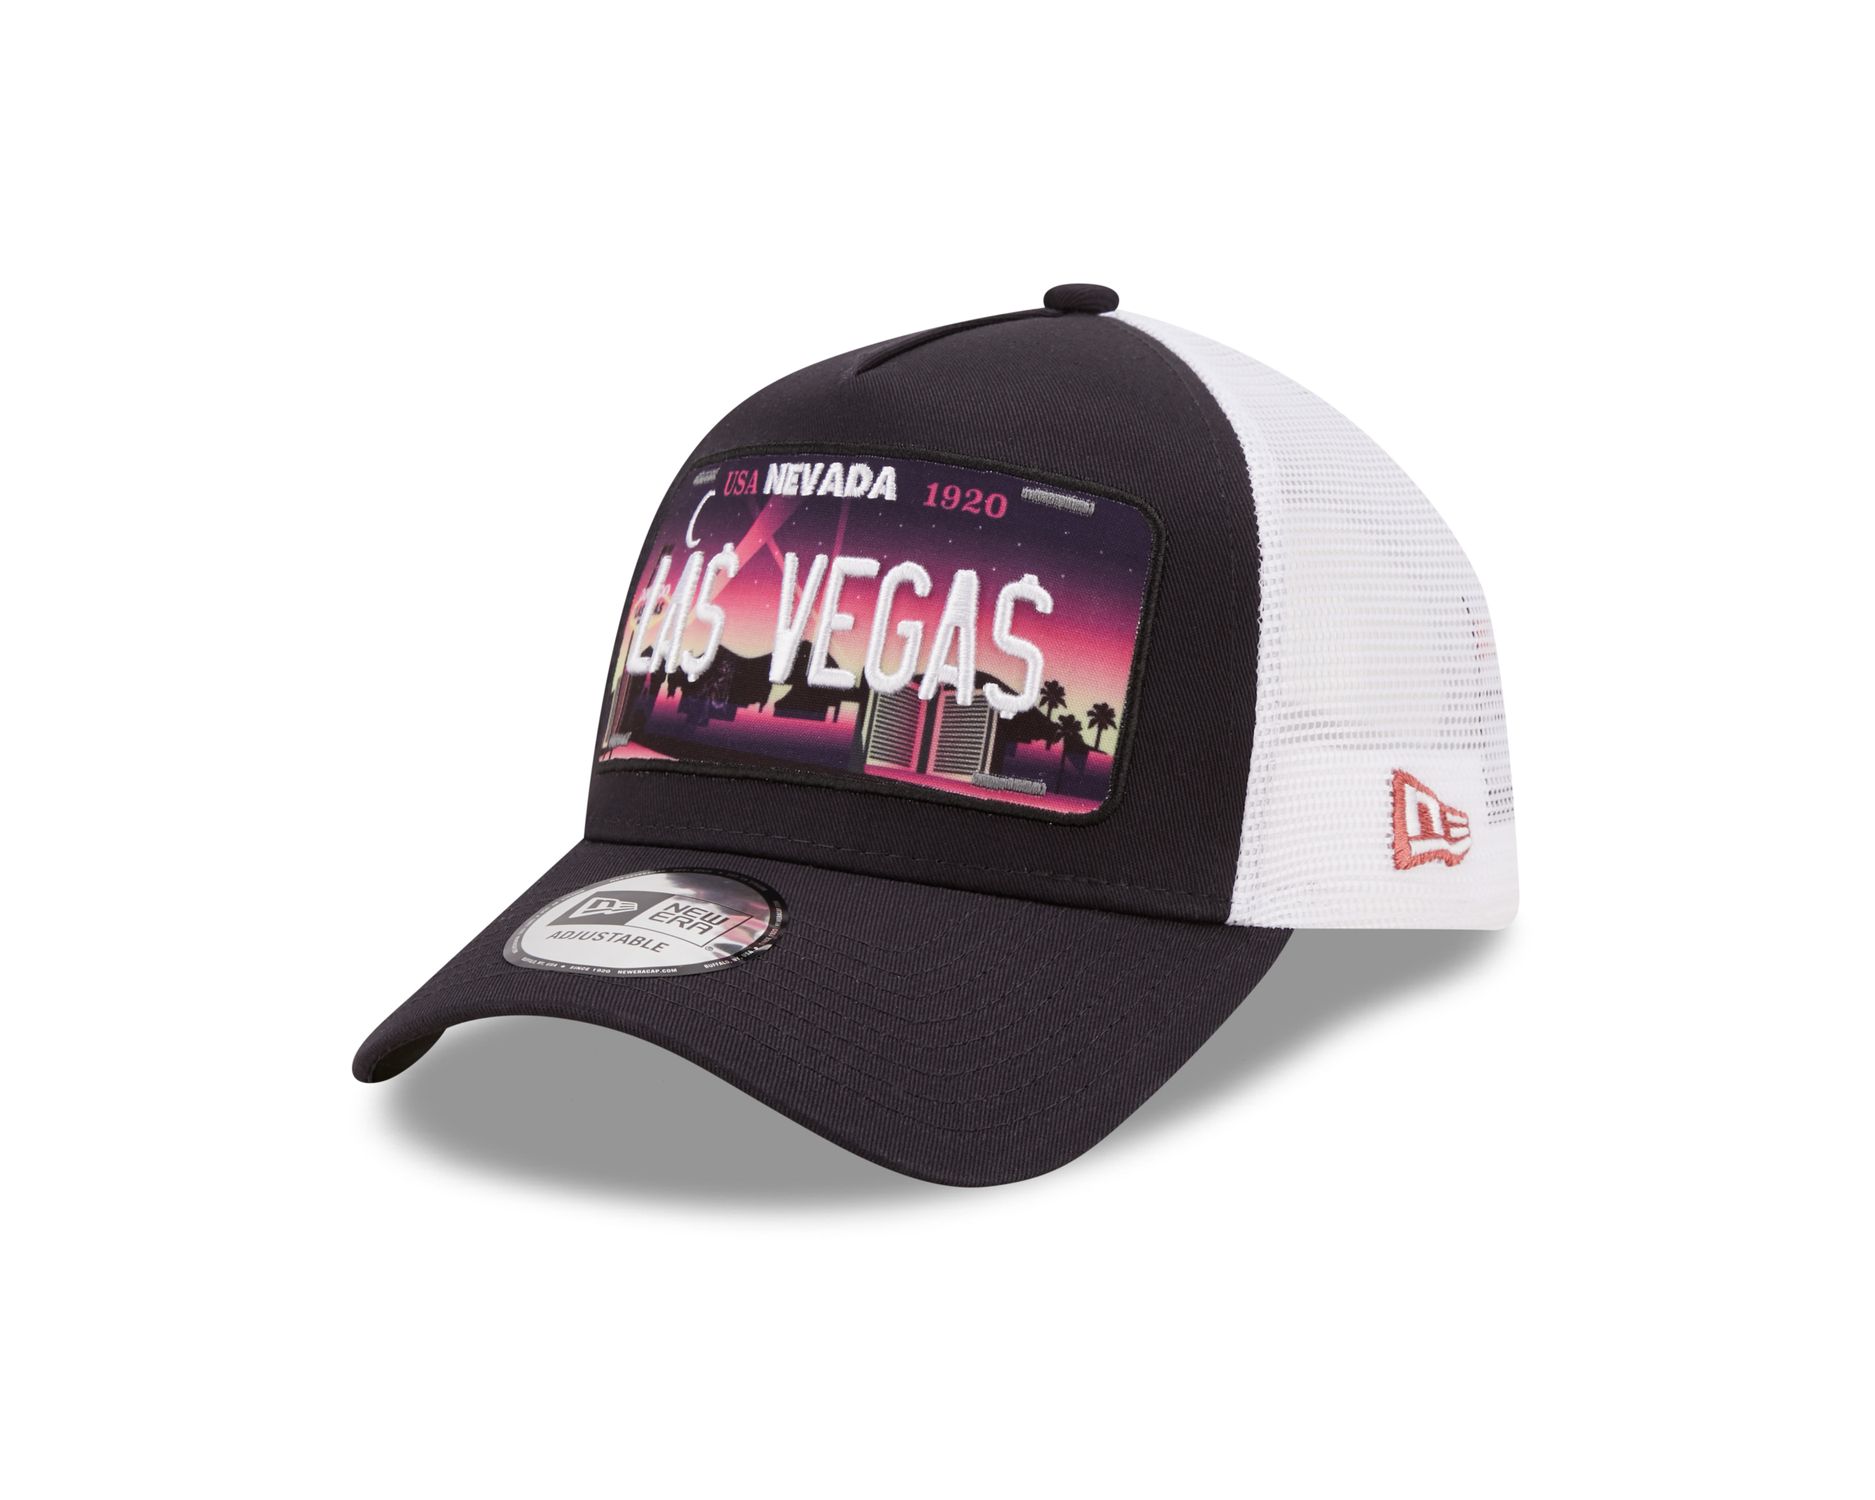 New Era Las Vegas License Plate Trucker Cap